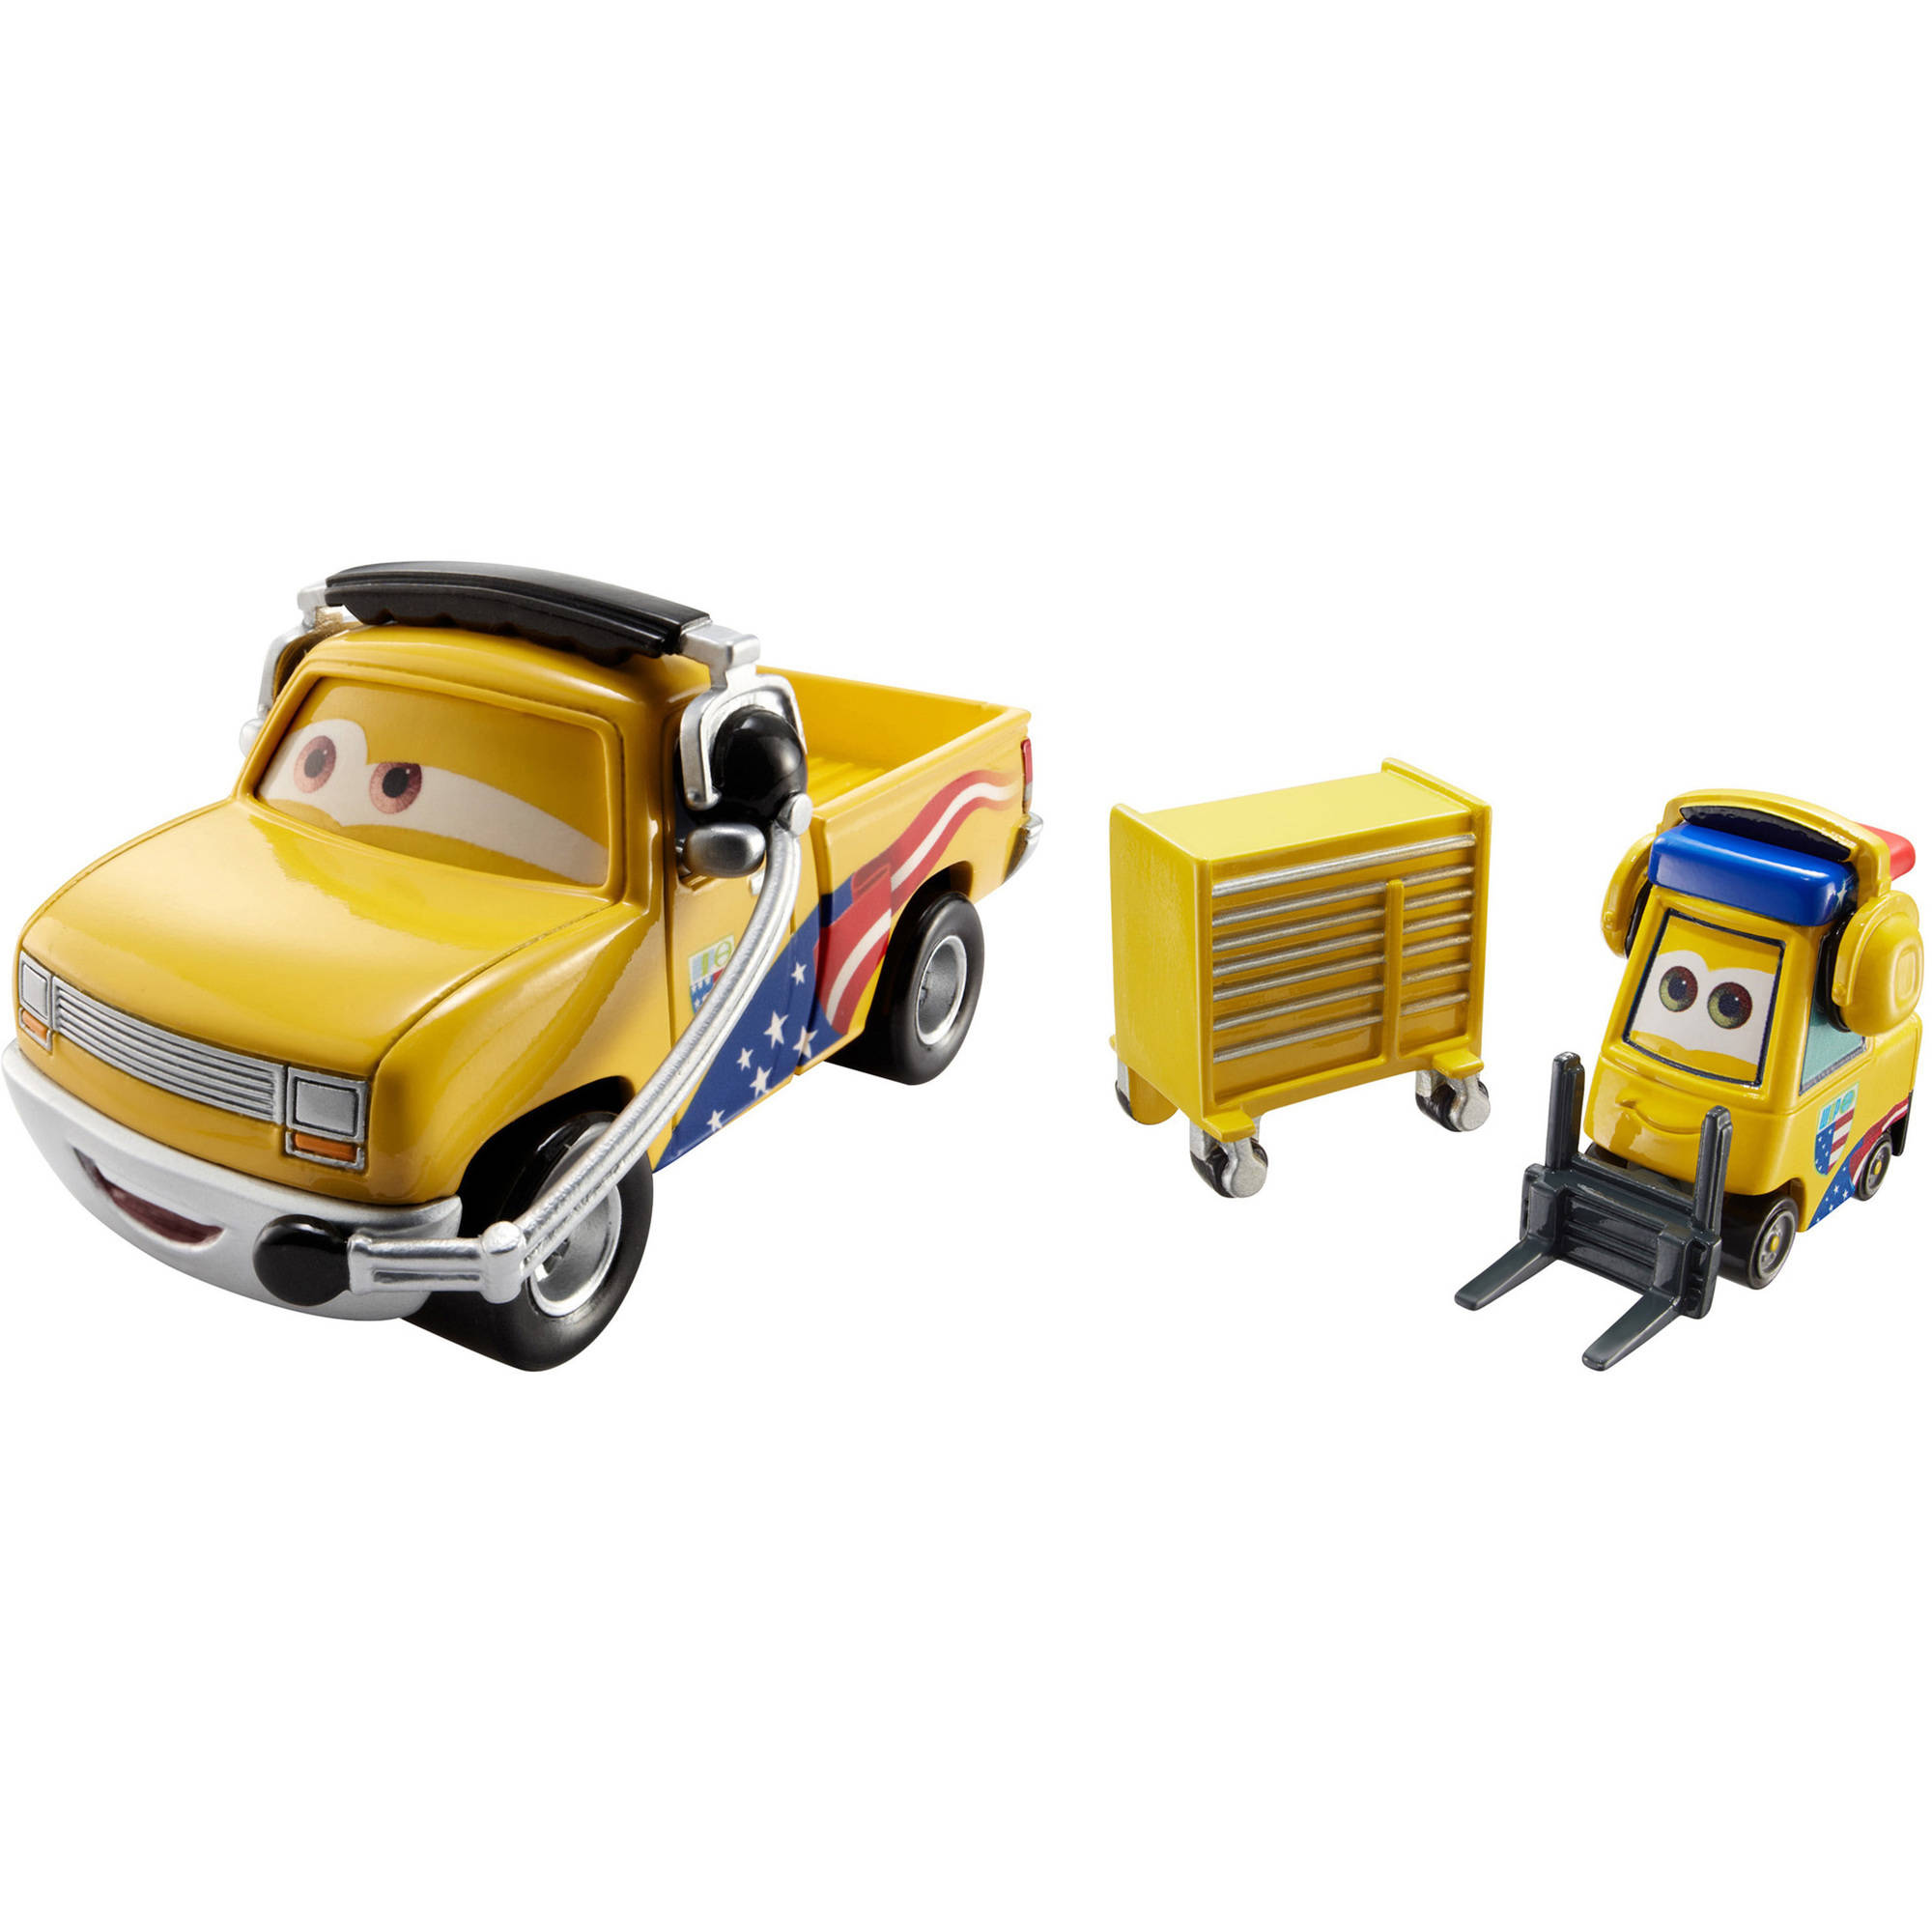 Disney/Pixar Cars Jeff Gorvette's Pitty & John Lassetire Vehicle Set - image 1 of 3